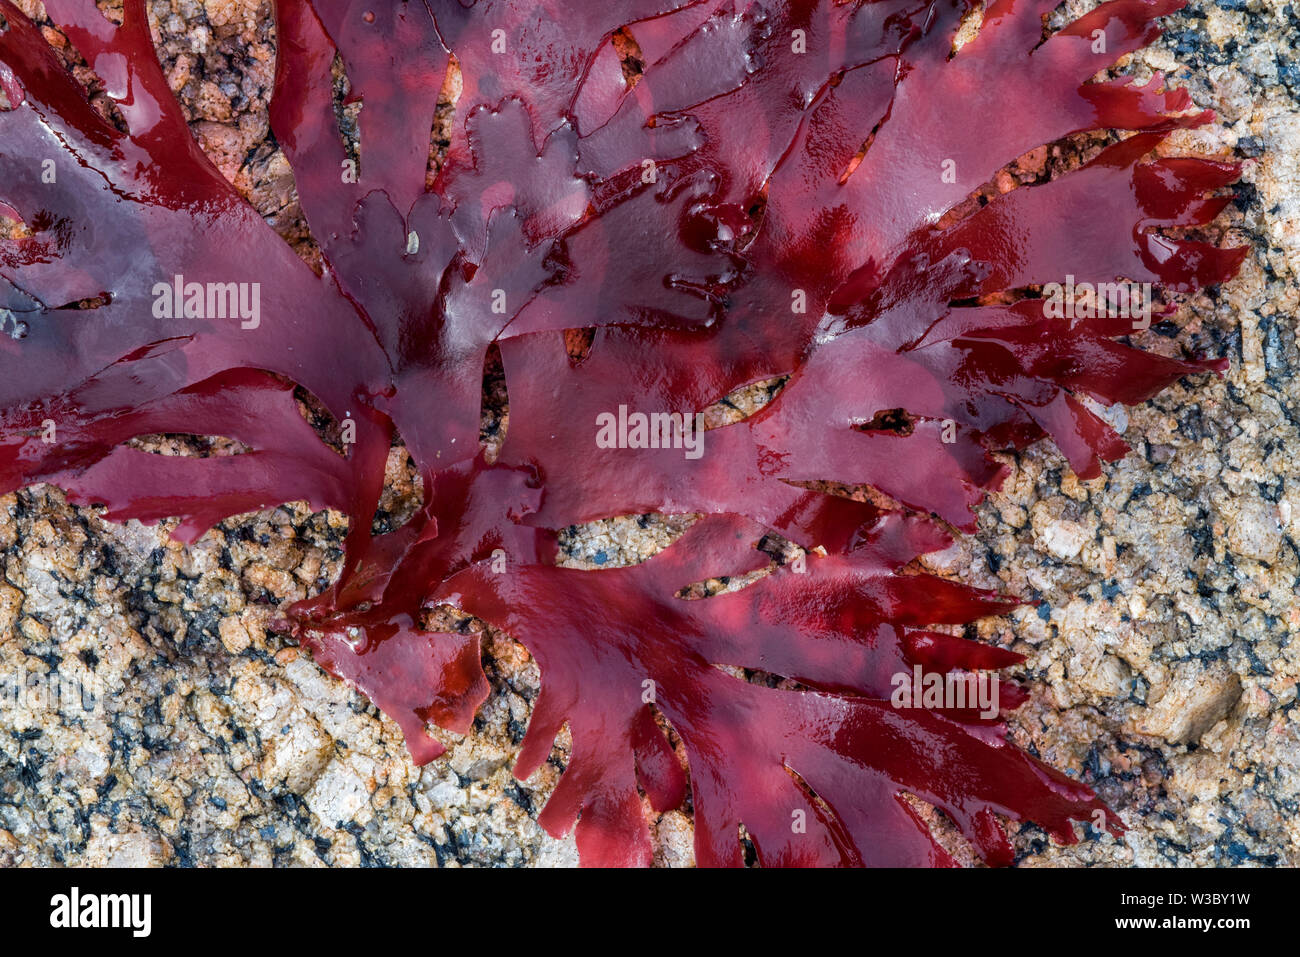 Irish moss / carrageen moss (Chondrus crispus) red alga washed ashore on rocky beach Stock Photo